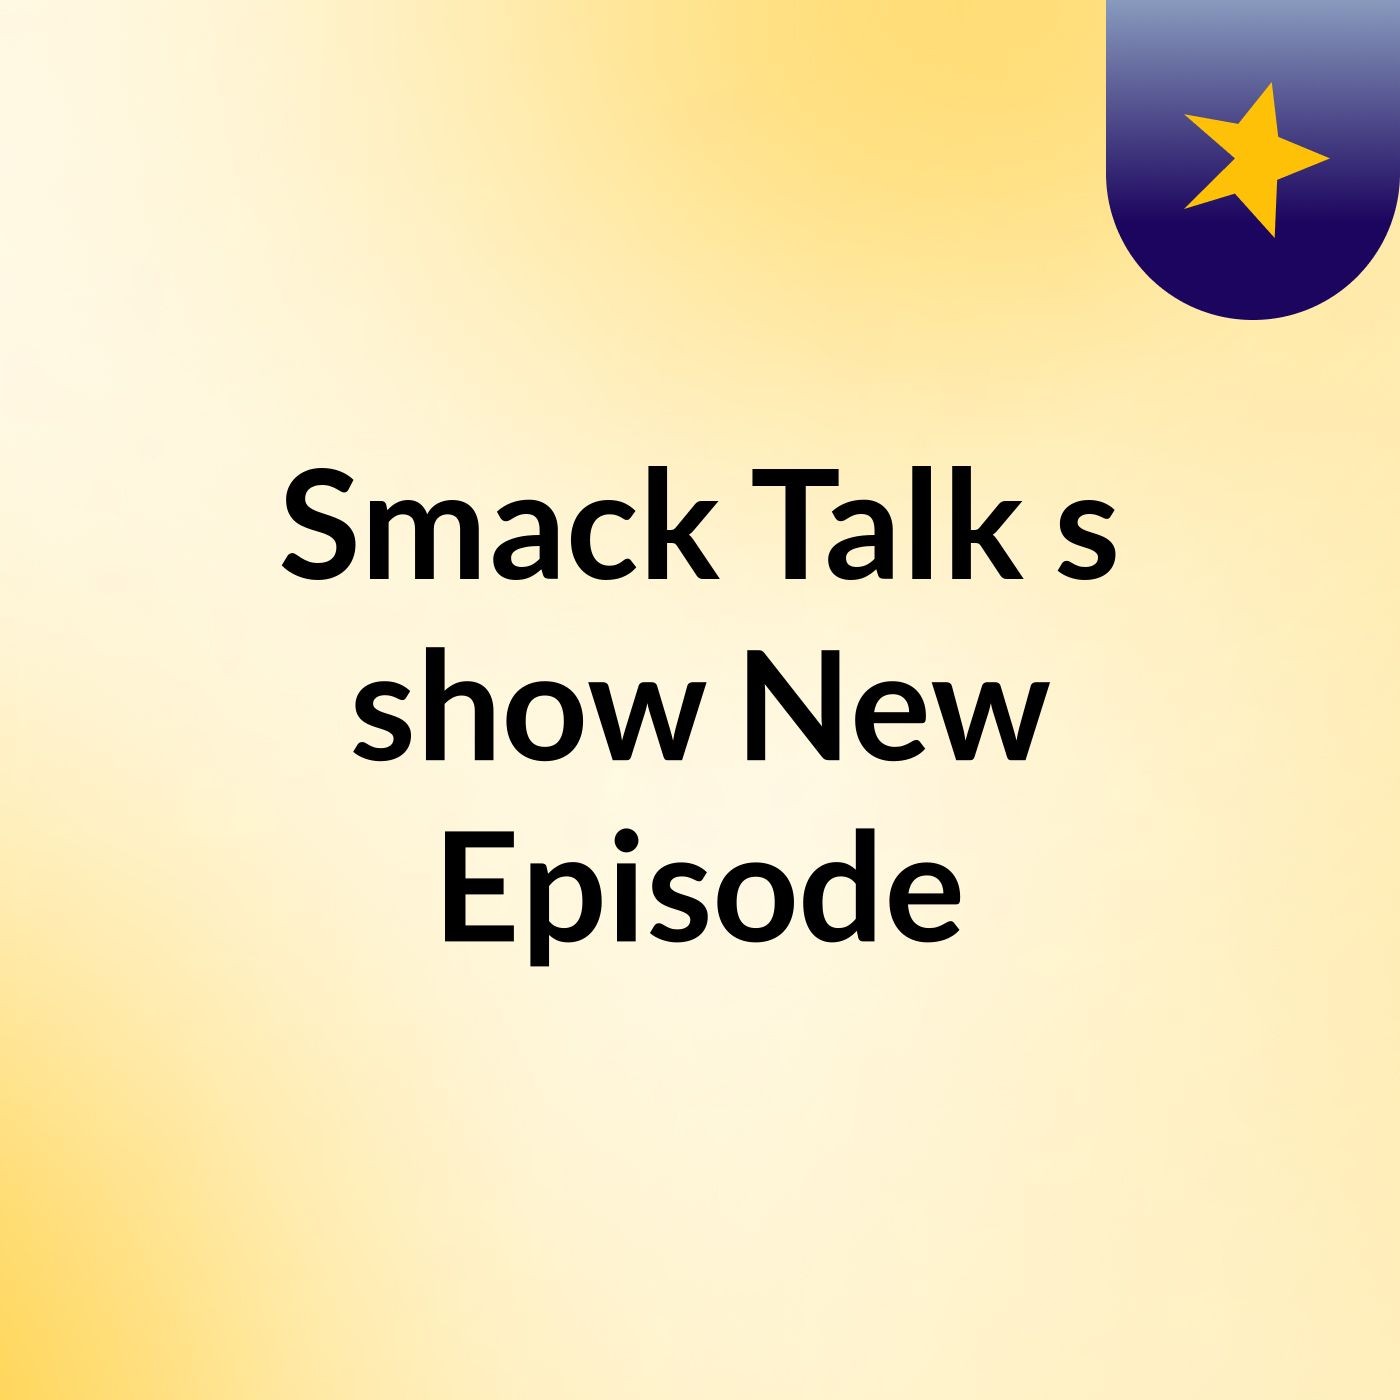 Smack Talk's show New Episode